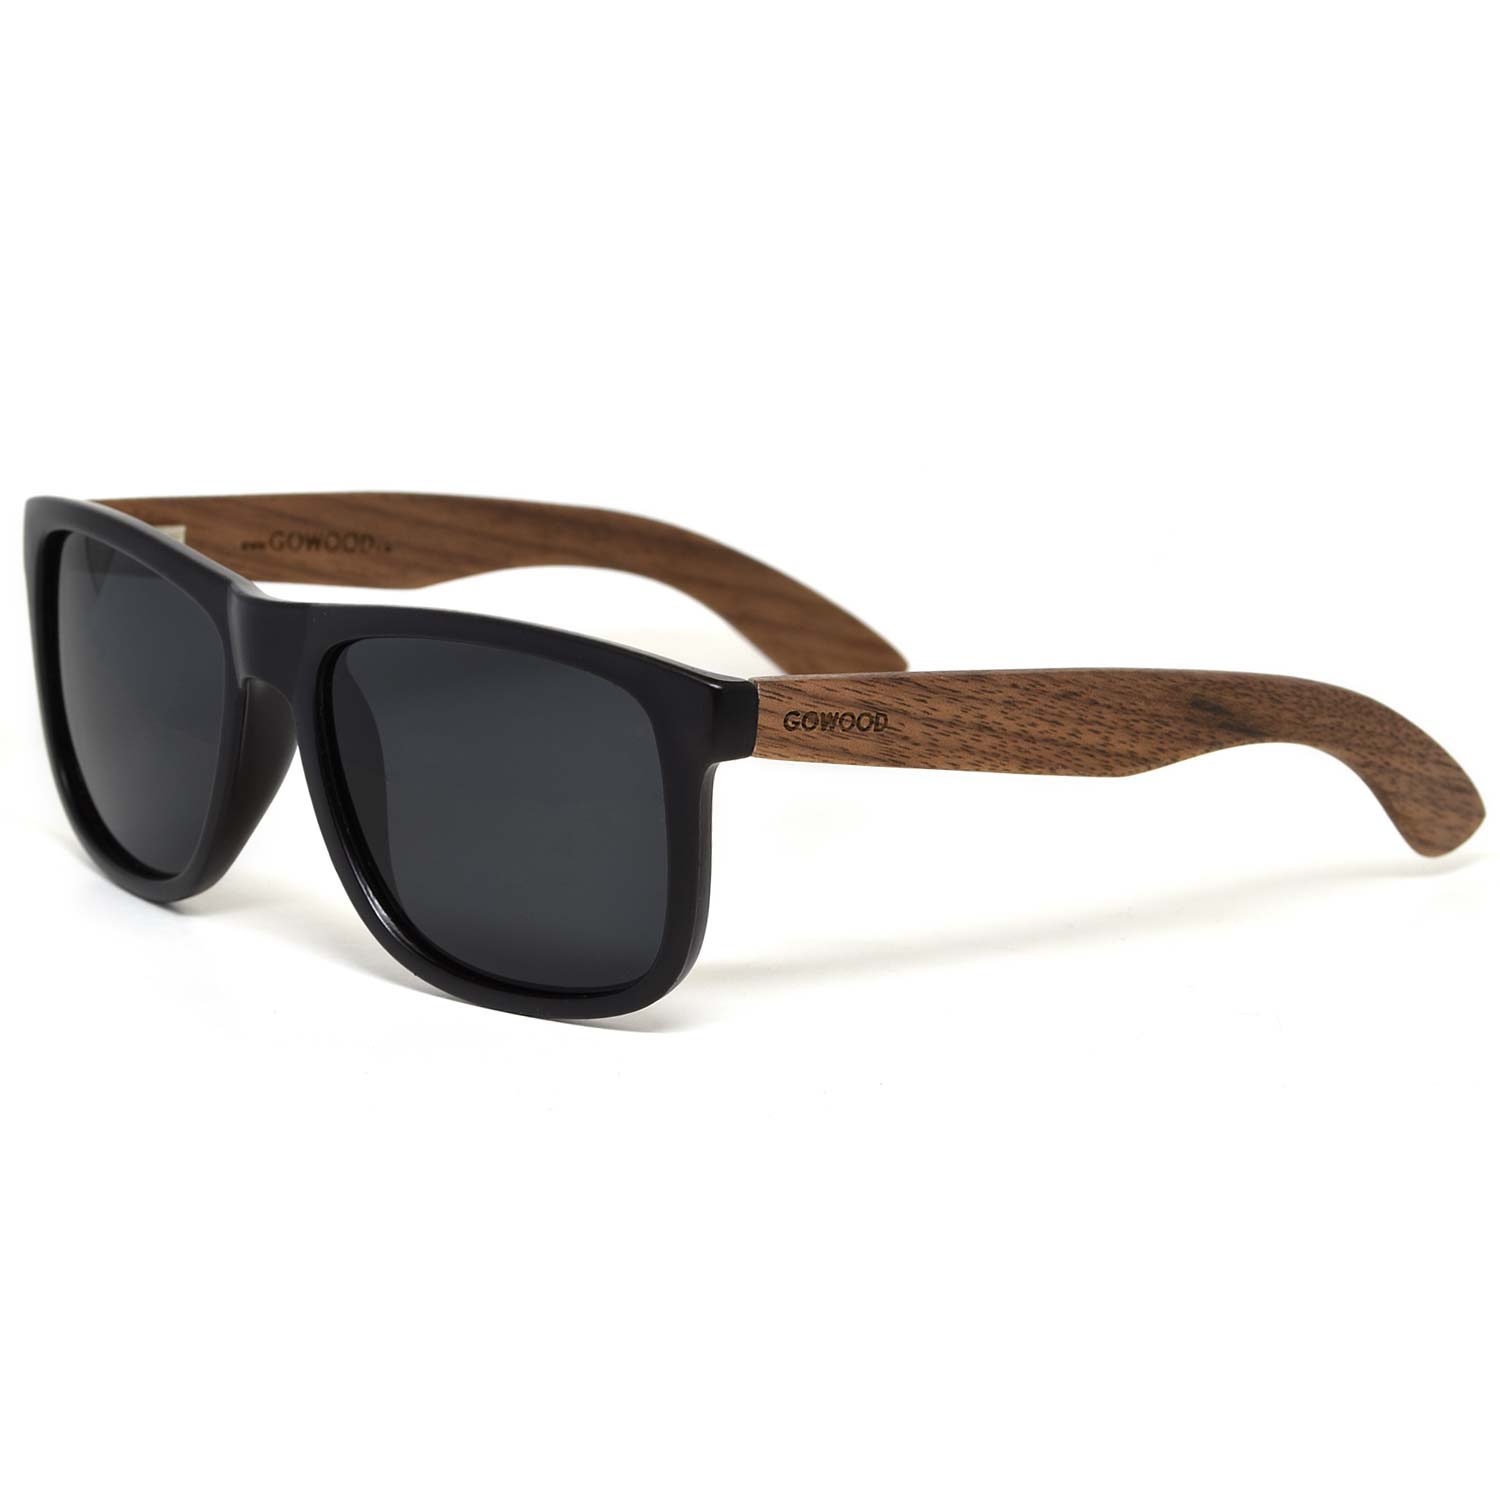 Square walnut wood sunglasses black polarized lenses